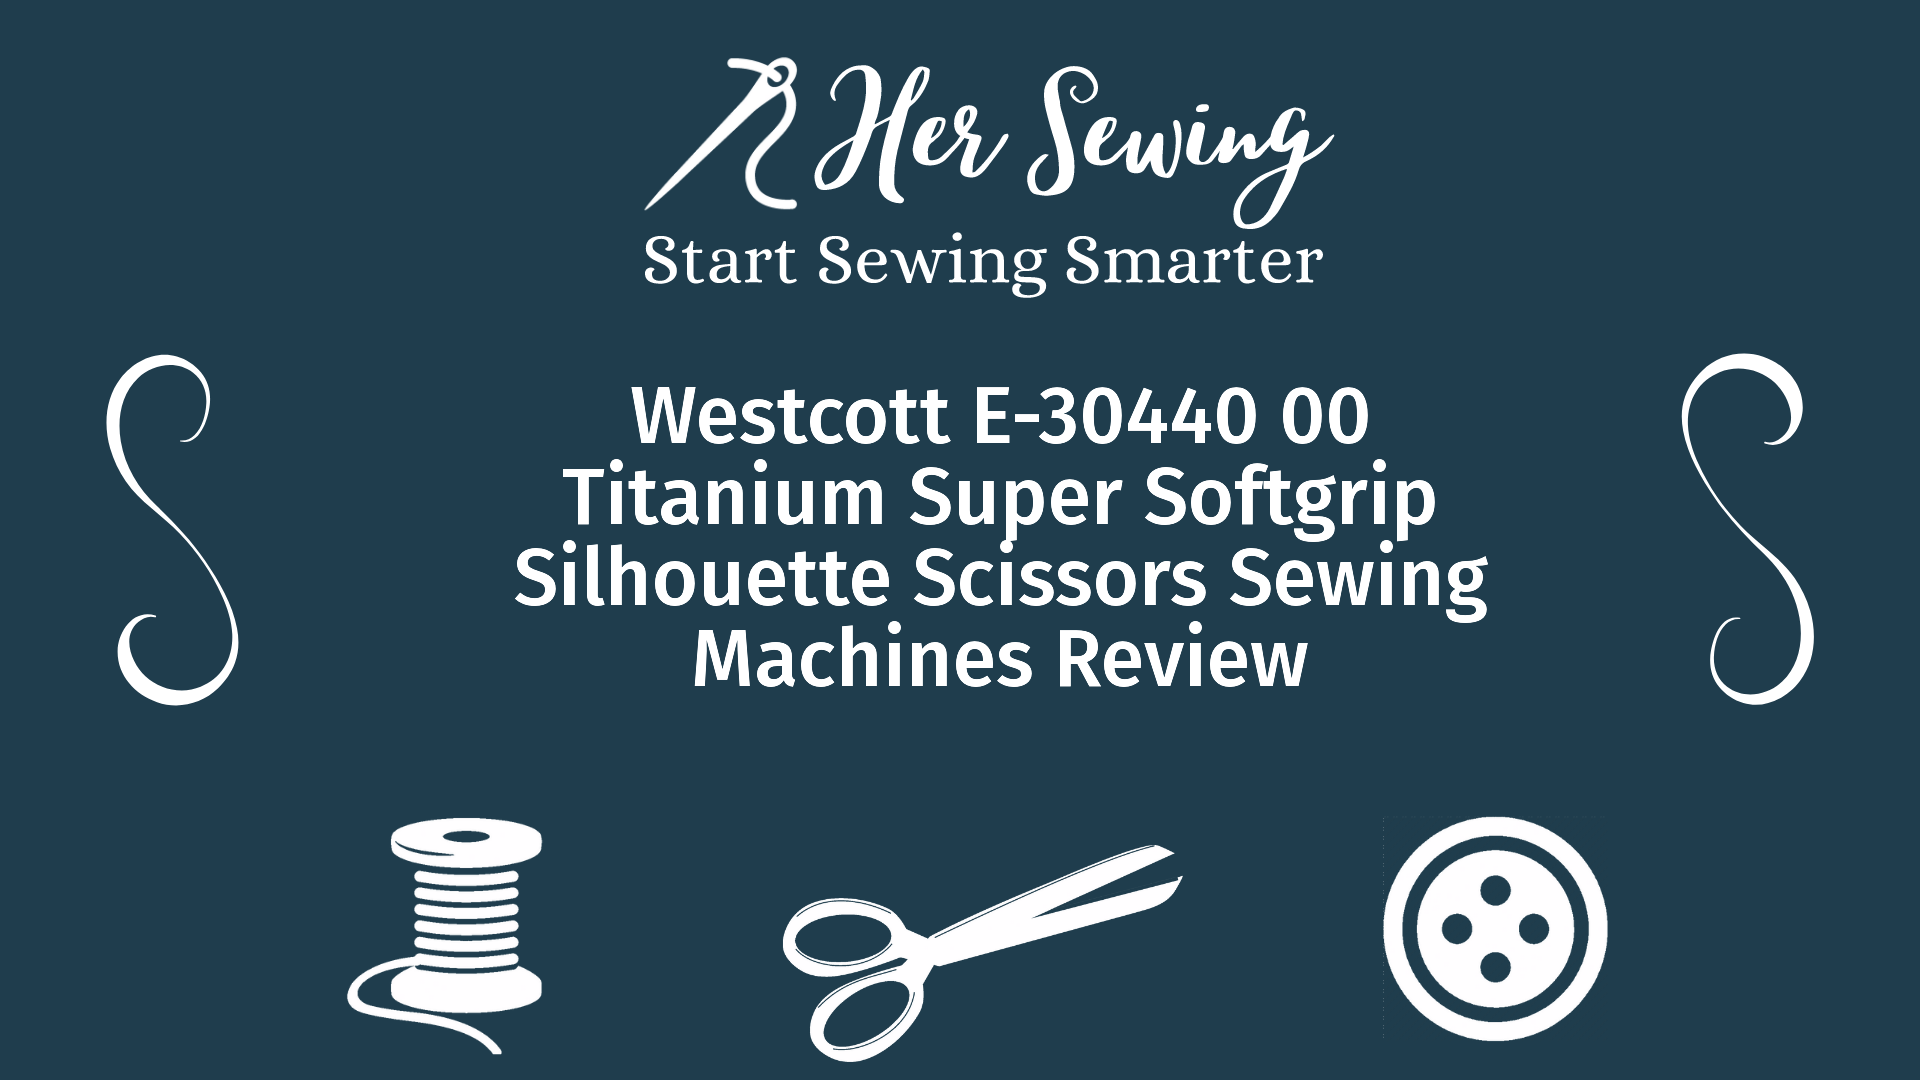 Westcott E-30440 00 Titanium Super Softgrip Silhouette Scissors Sewing Machines Review